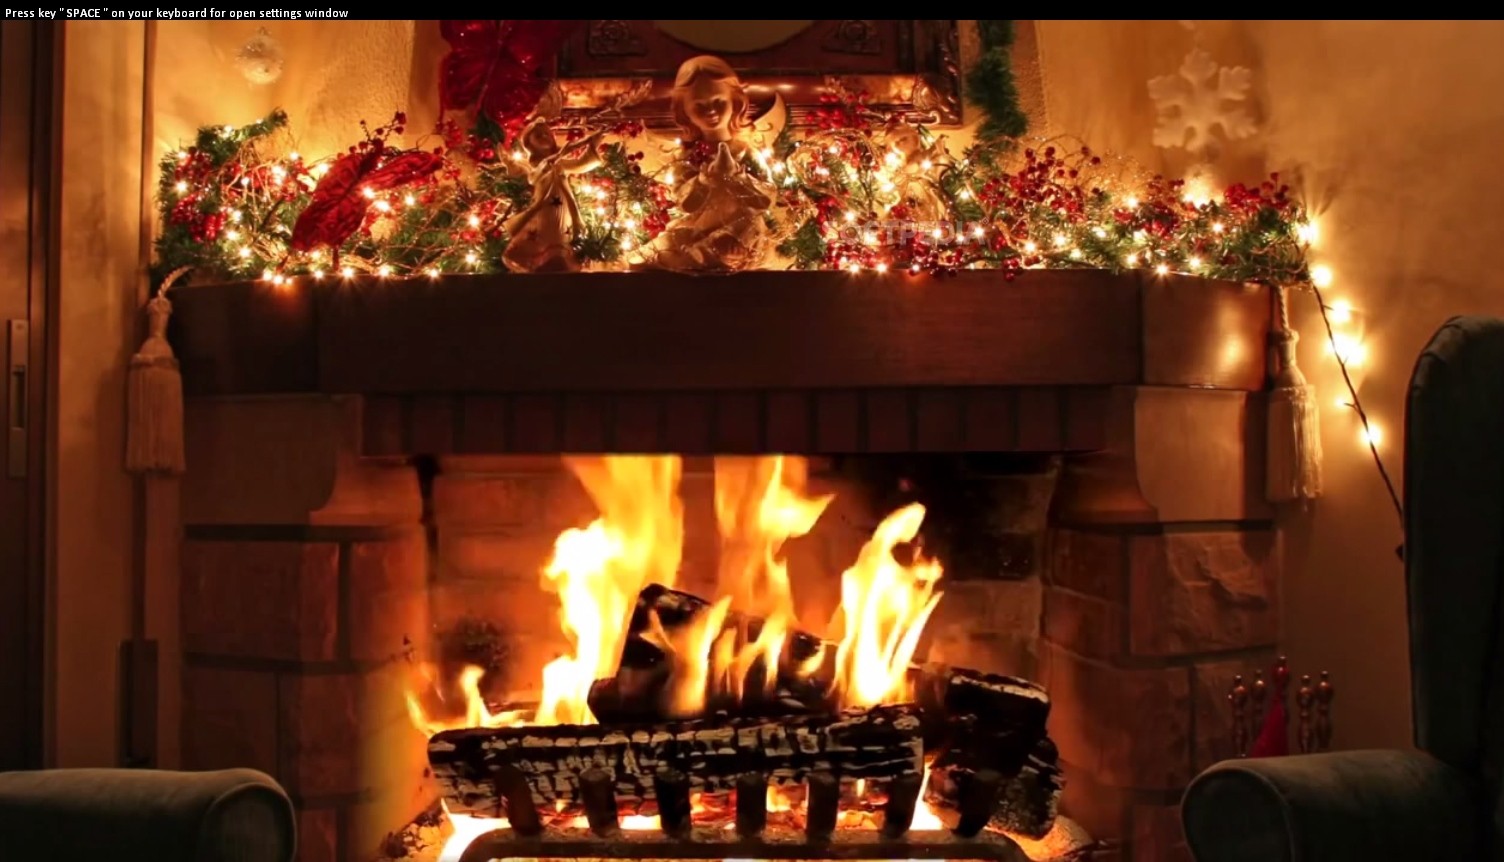 fireplace live hd screensaver